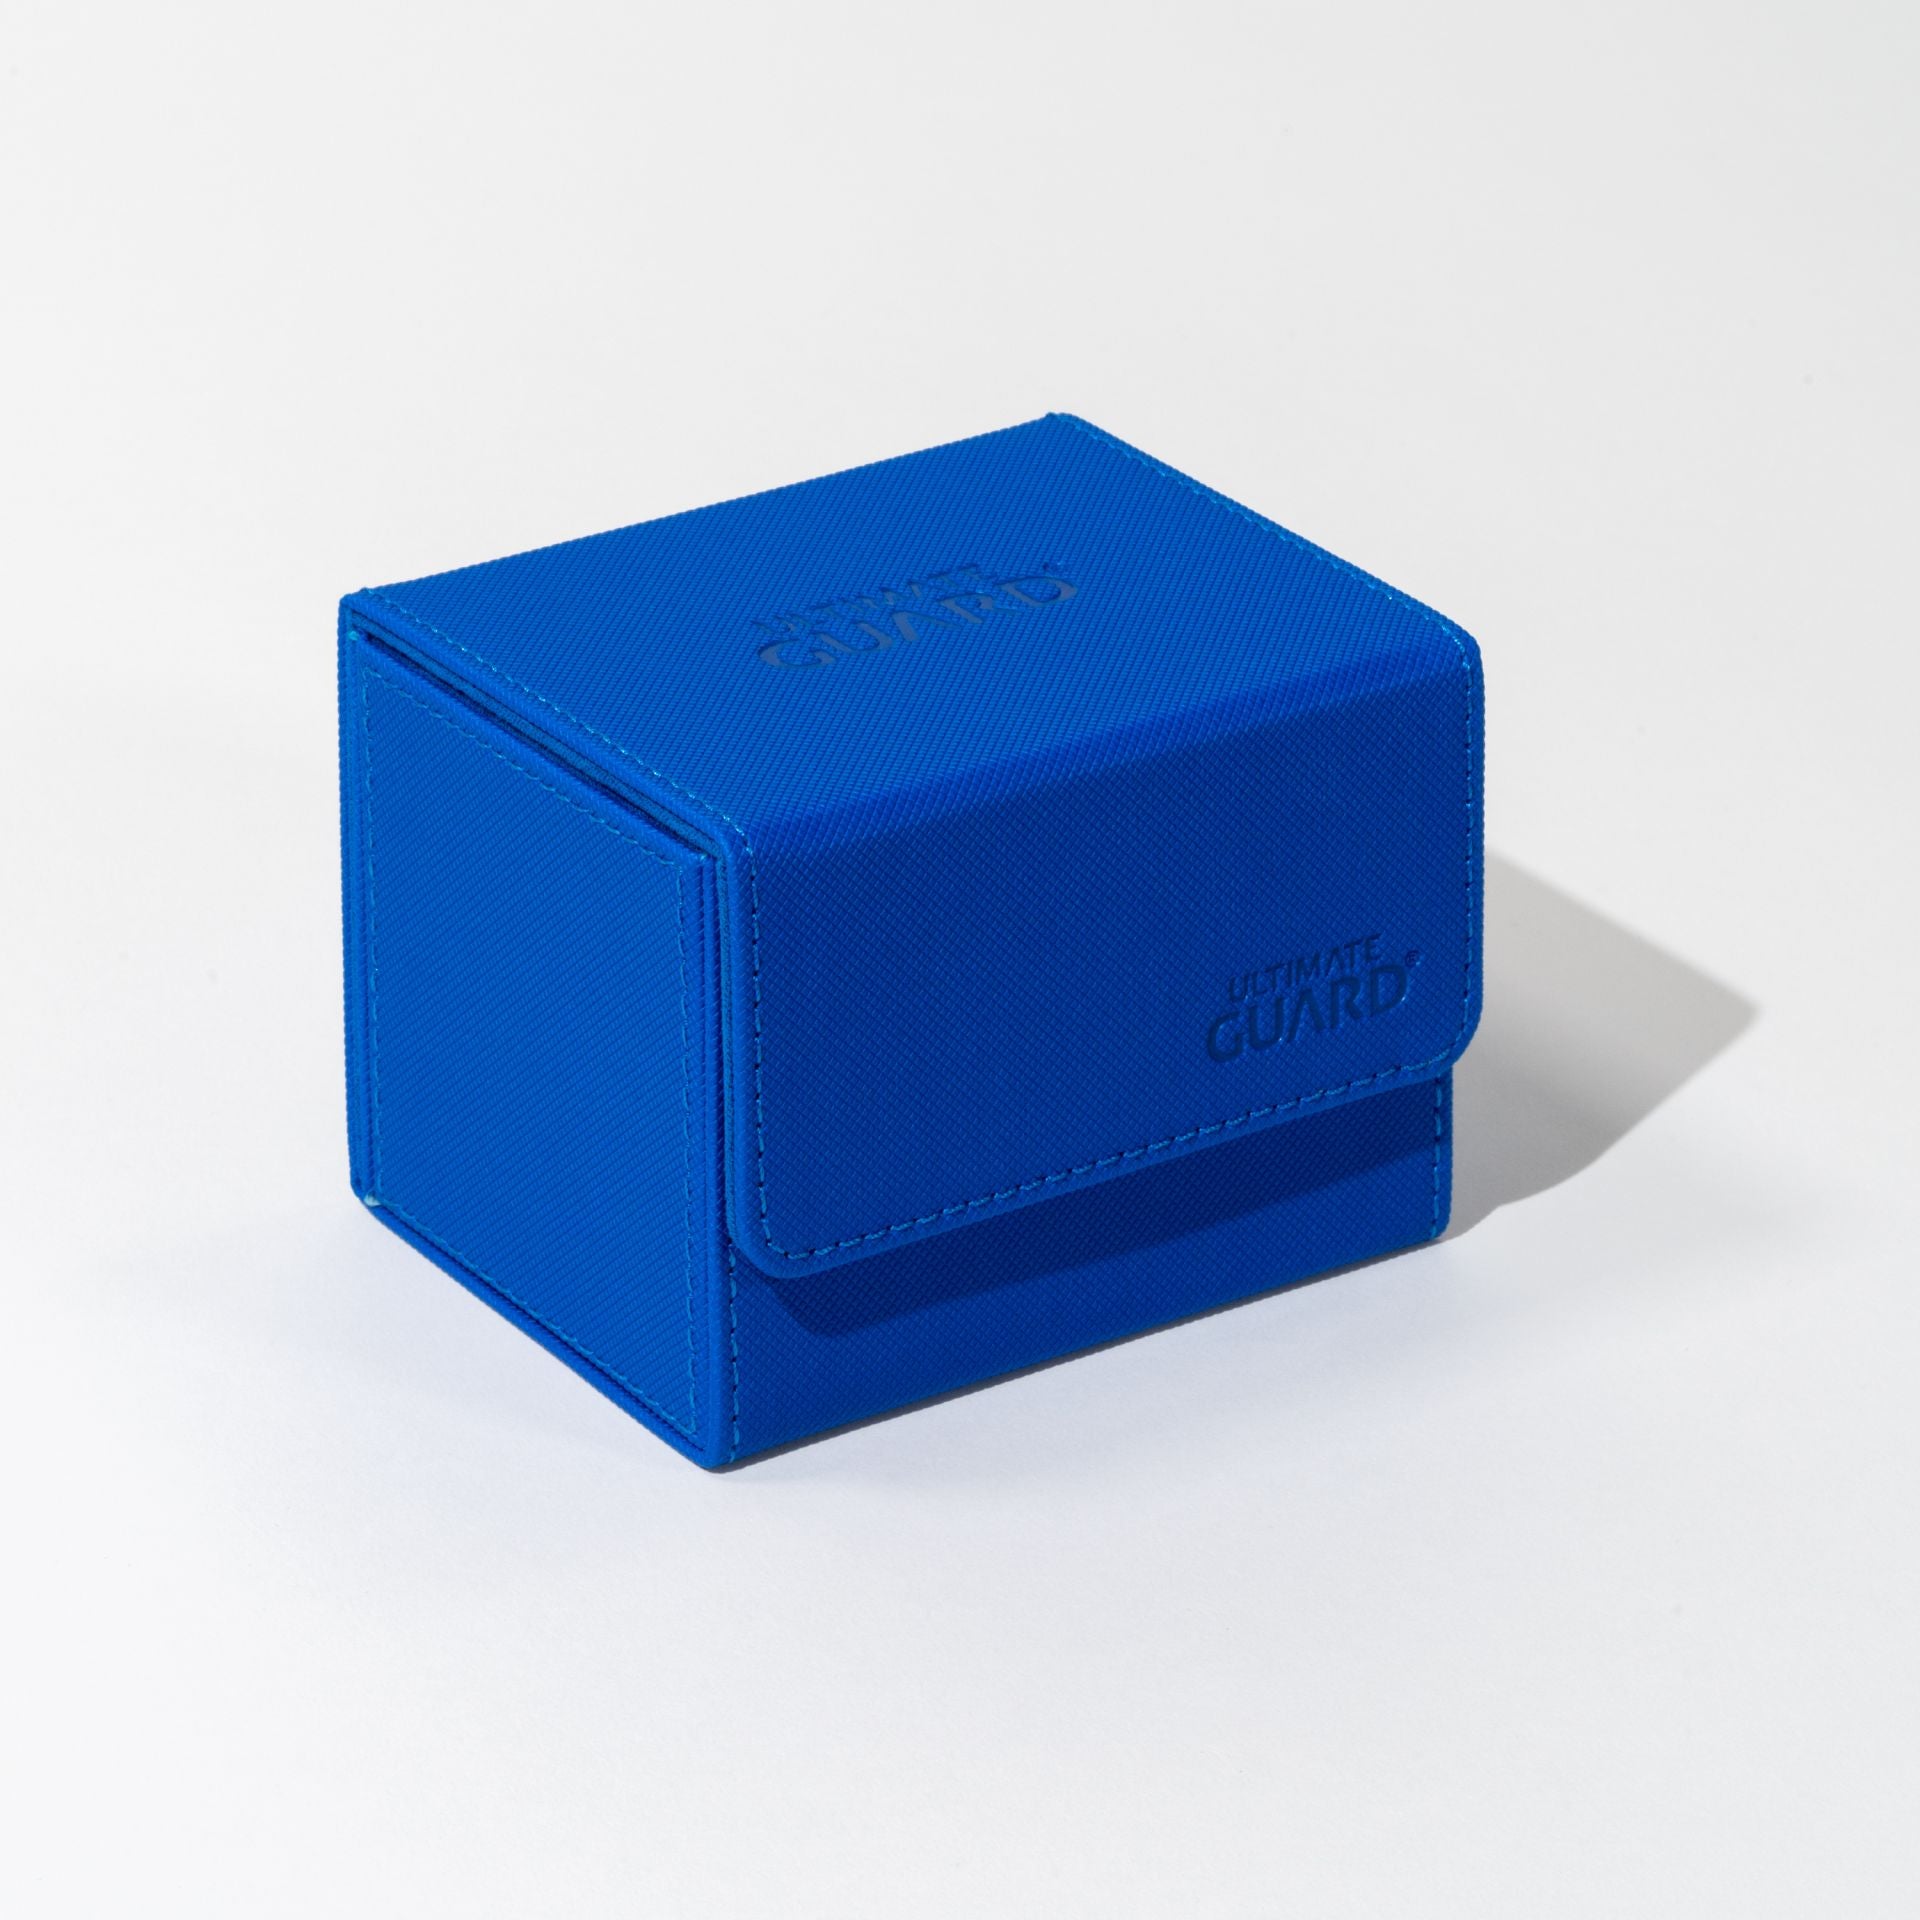 Ultimate Guard Sidewinder 100+ XenoSkin Monocolor Card Deck Case Storage Box